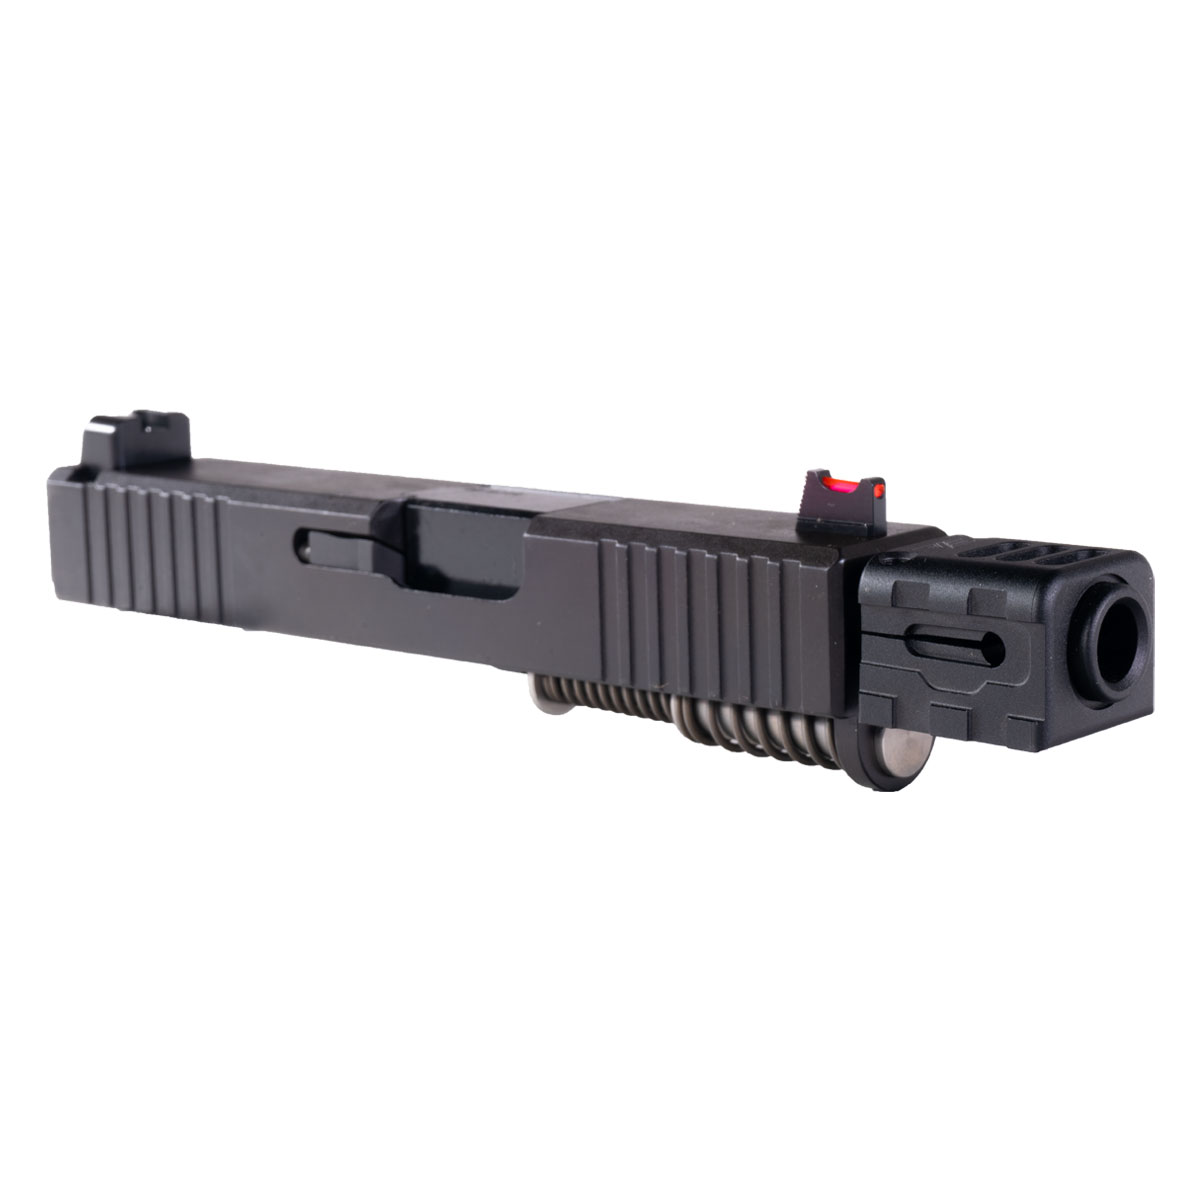 DDS 'Pyknic w/ Sylvan Arms Compensator' 9mm Complete Slide Kit - Glock 26 Gen 1-2 Compatible